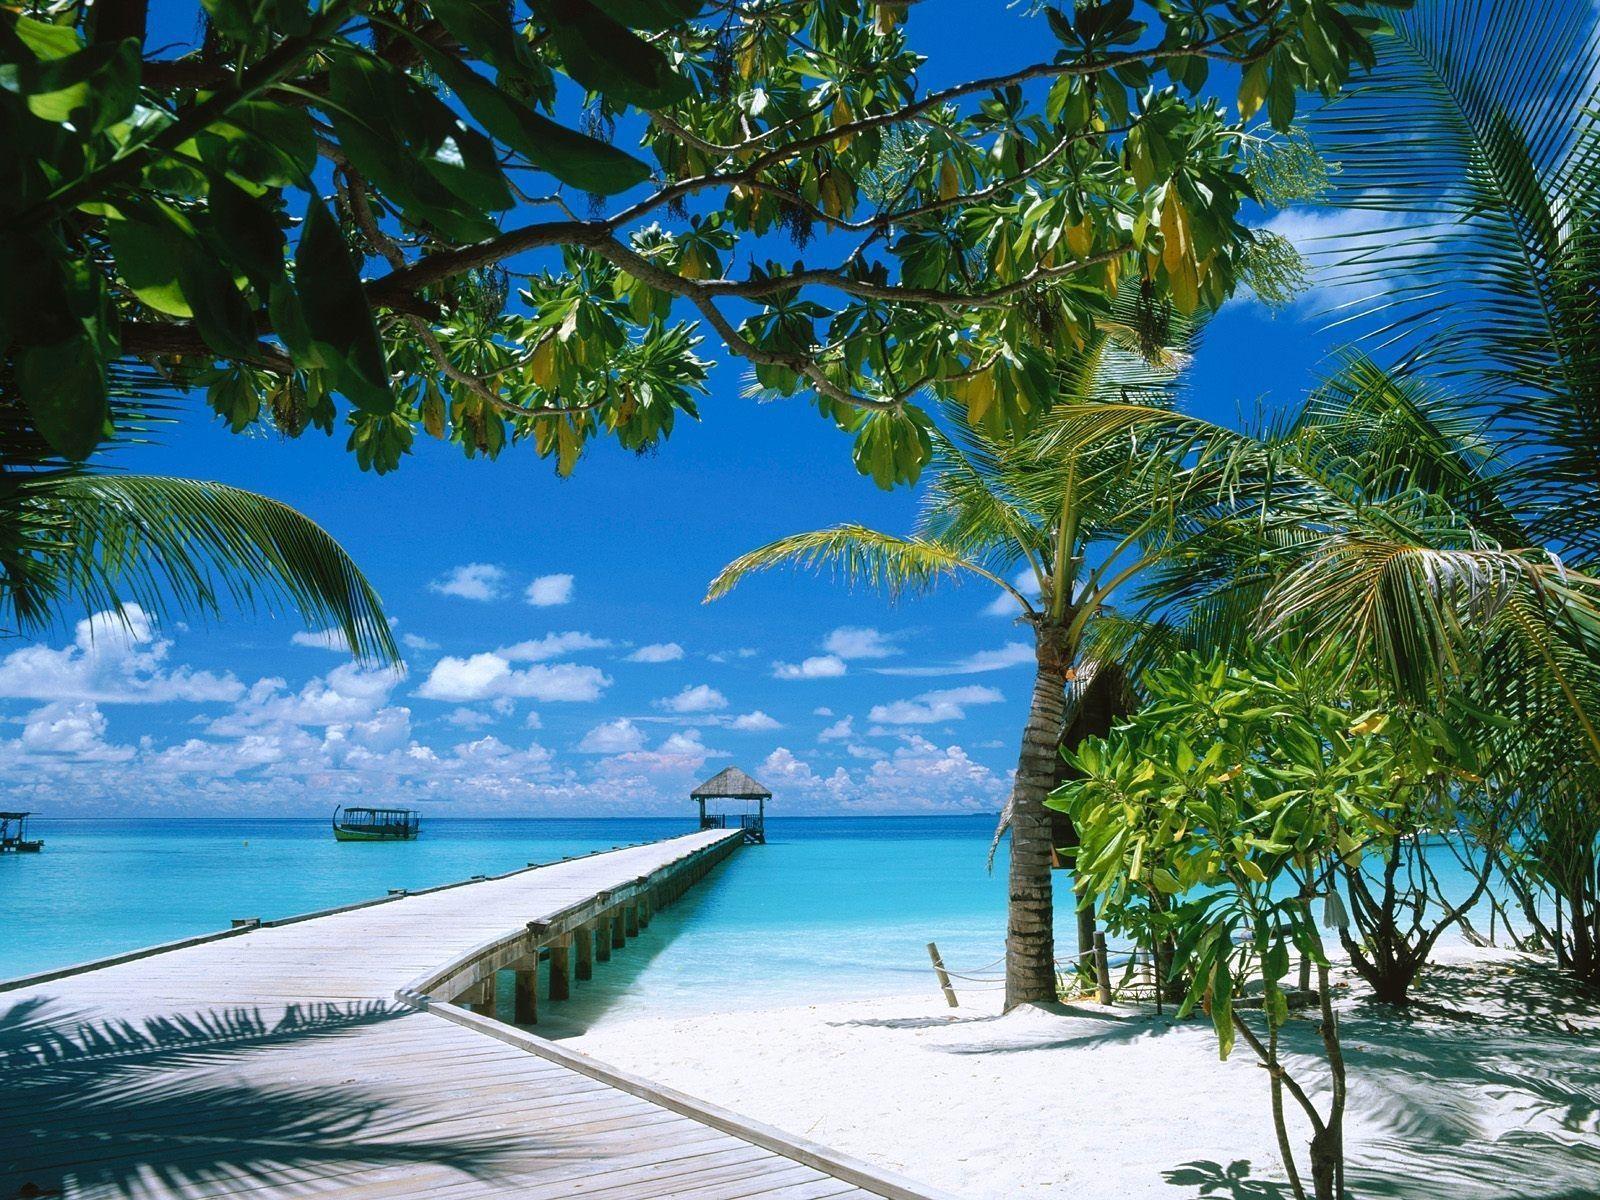 Long Way To Bay tropical Island Wallpaper Image For Desktop taken